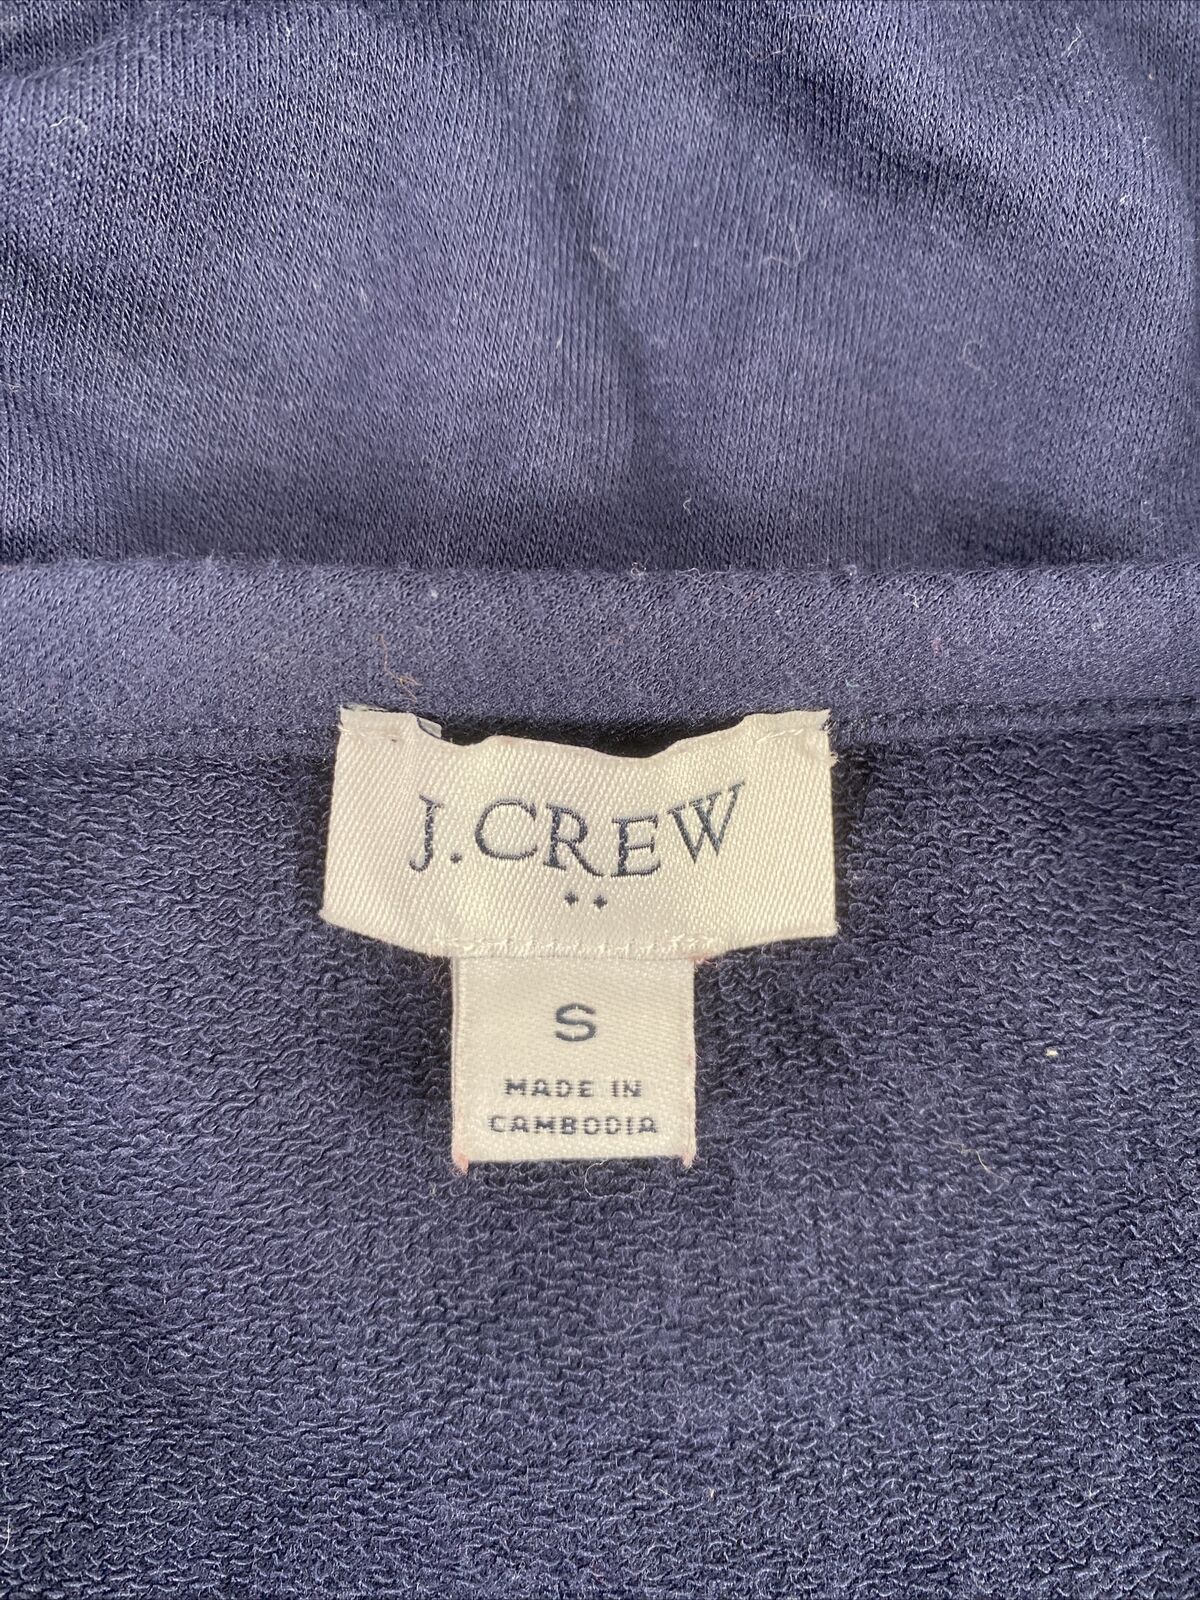 J. Crew Top de punto de rizo en capas de manga larga azul para mujer - S